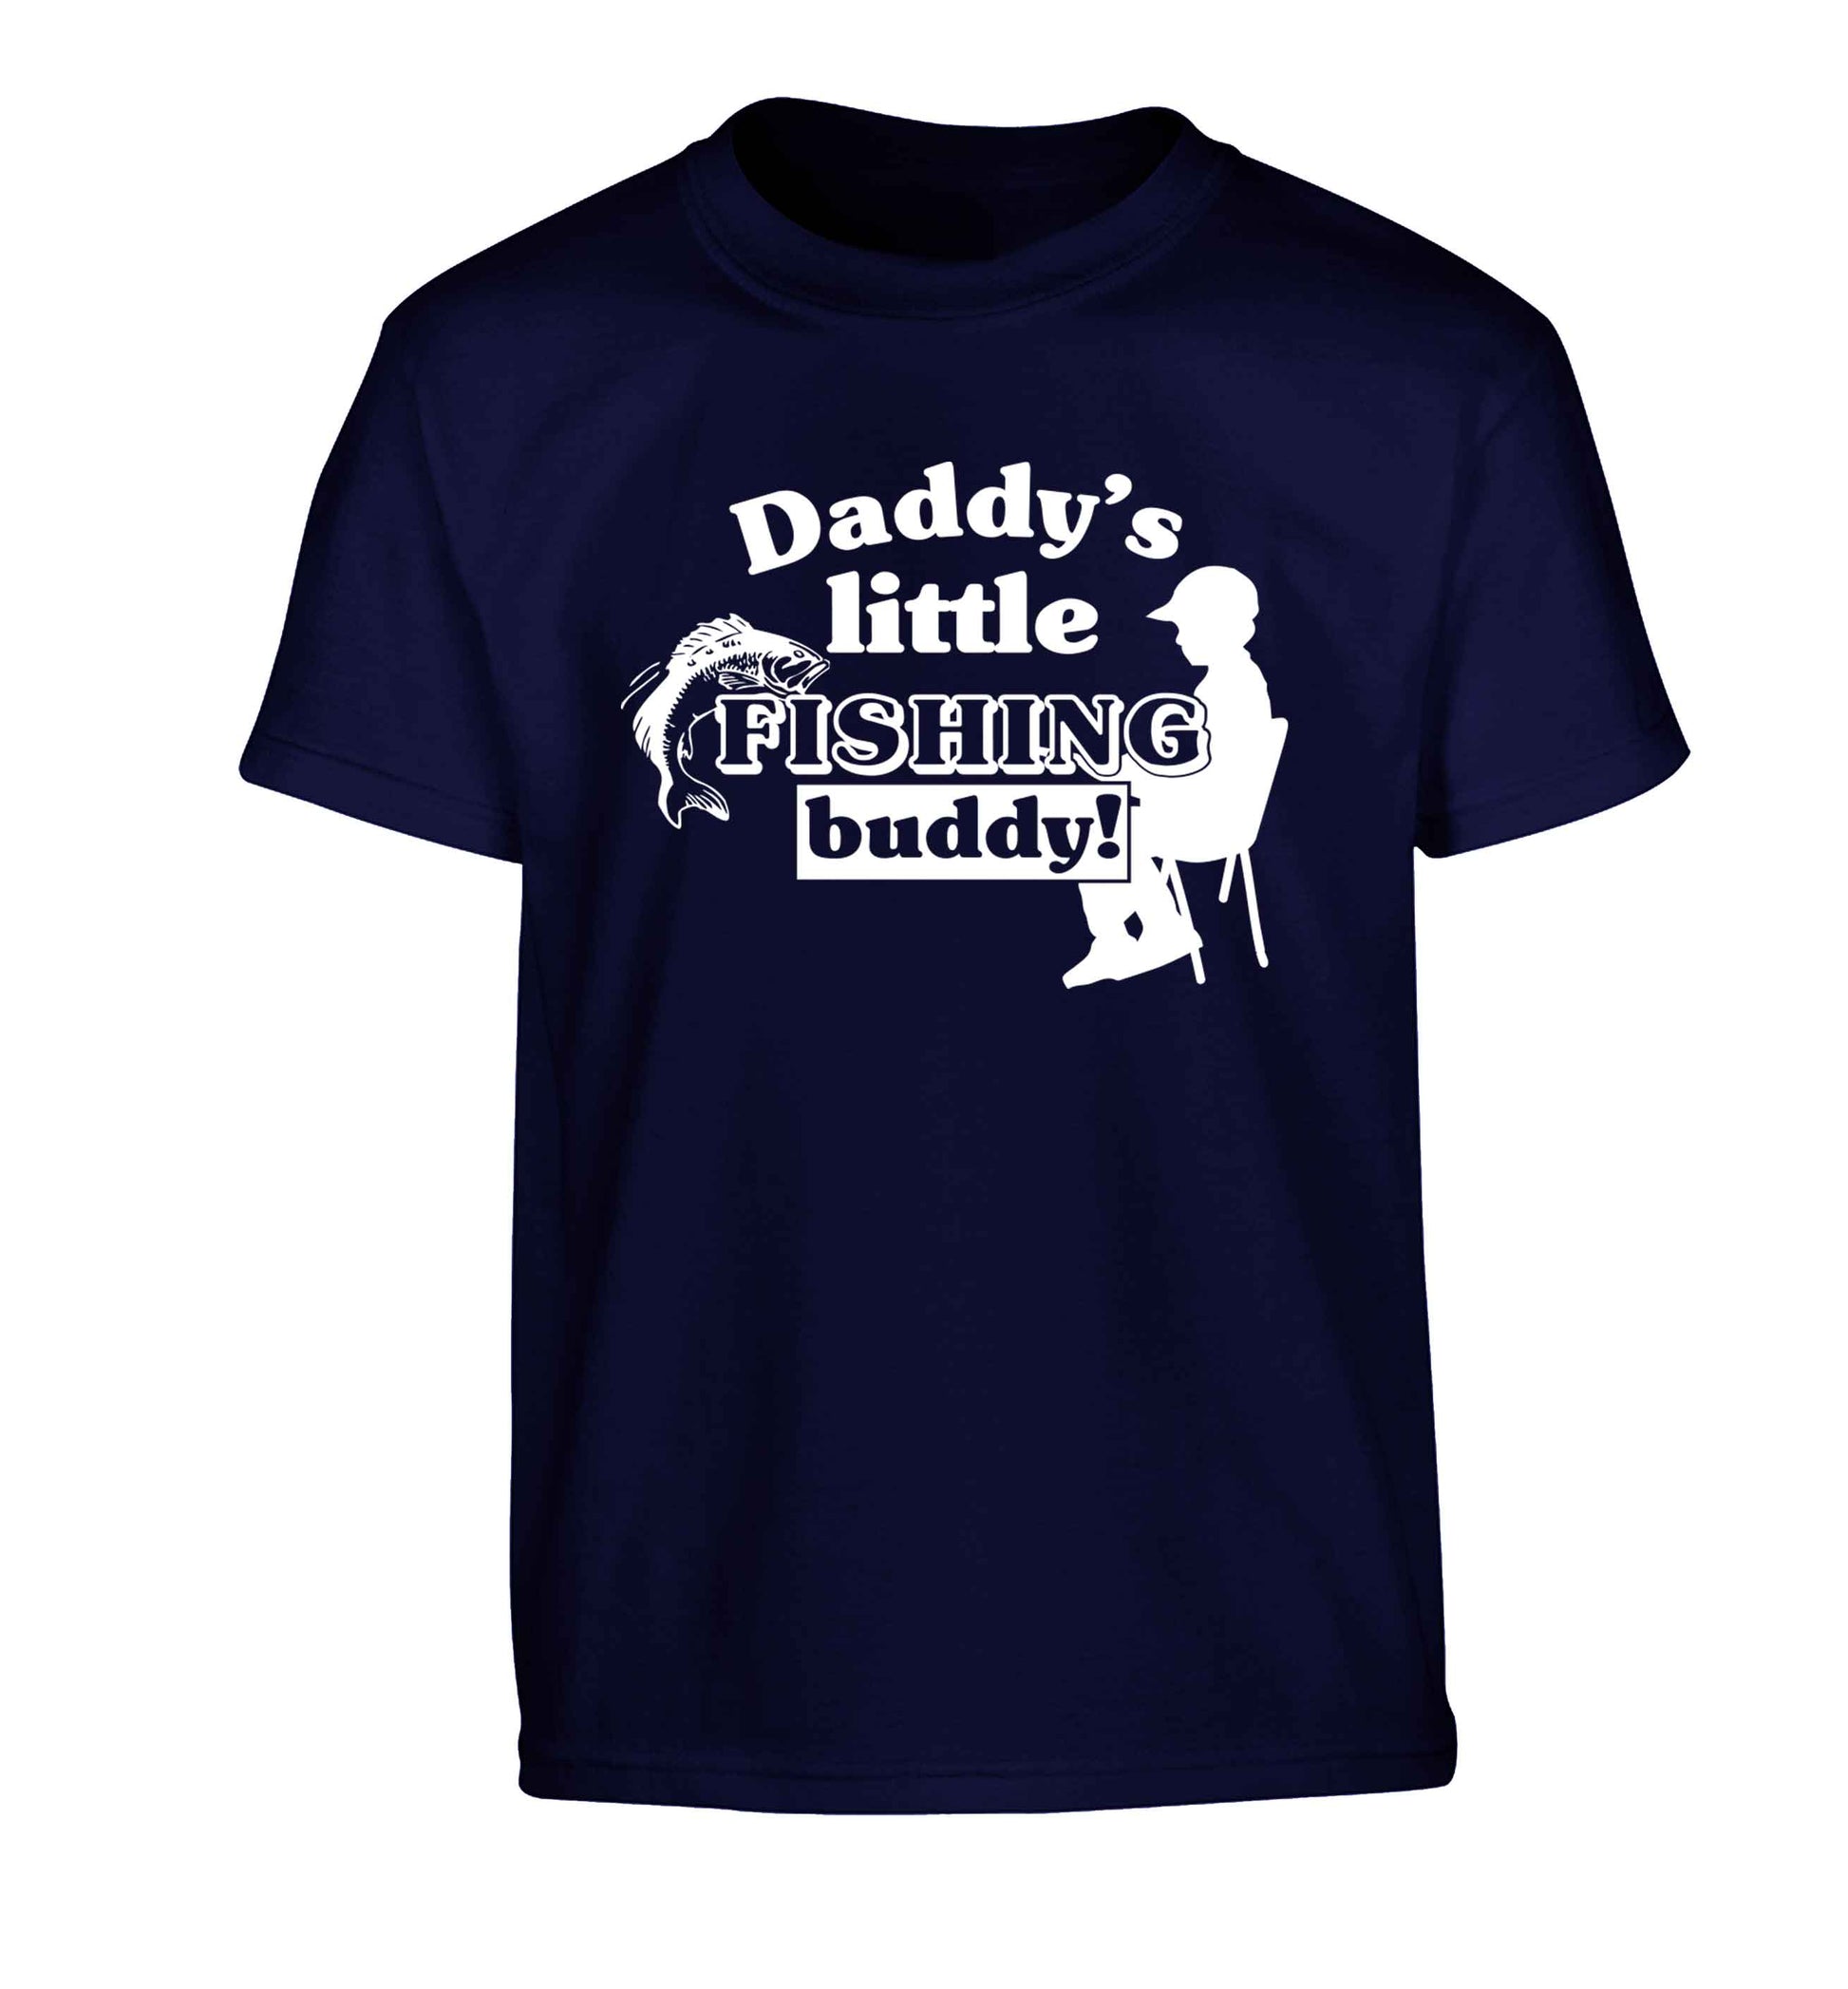 Daddy's little fishing buddy Children's navy Tshirt 12-13 Years